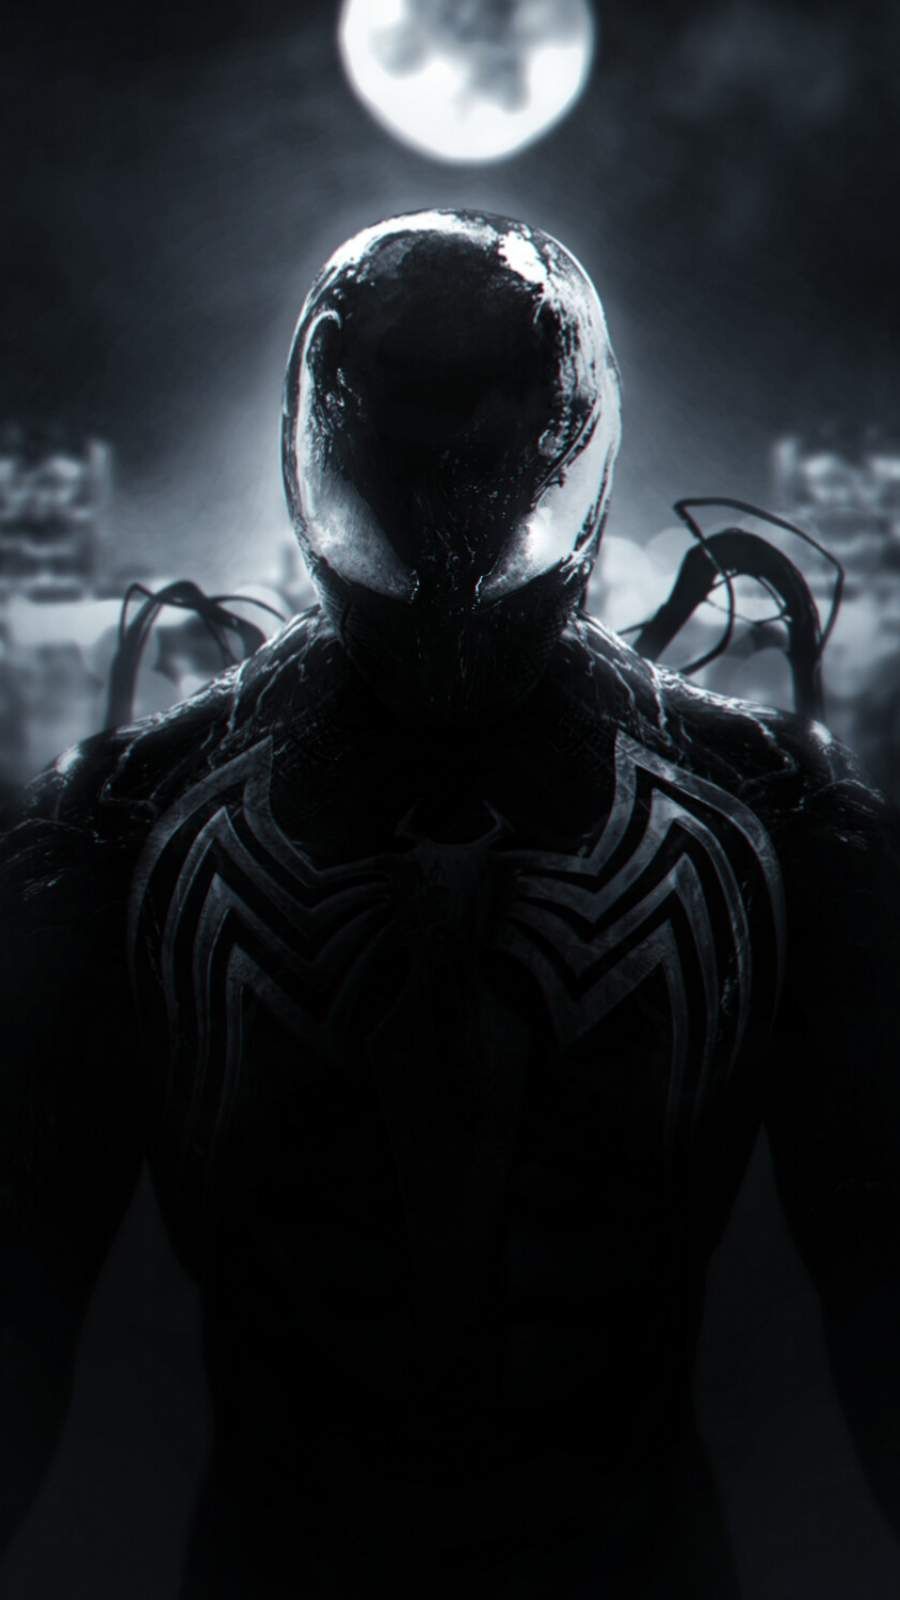 SPIDER MAN SYMBIOTE iPhone Wallpaper. Symbiote spiderman, Marvel comics wallpaper, Spiderman artwork